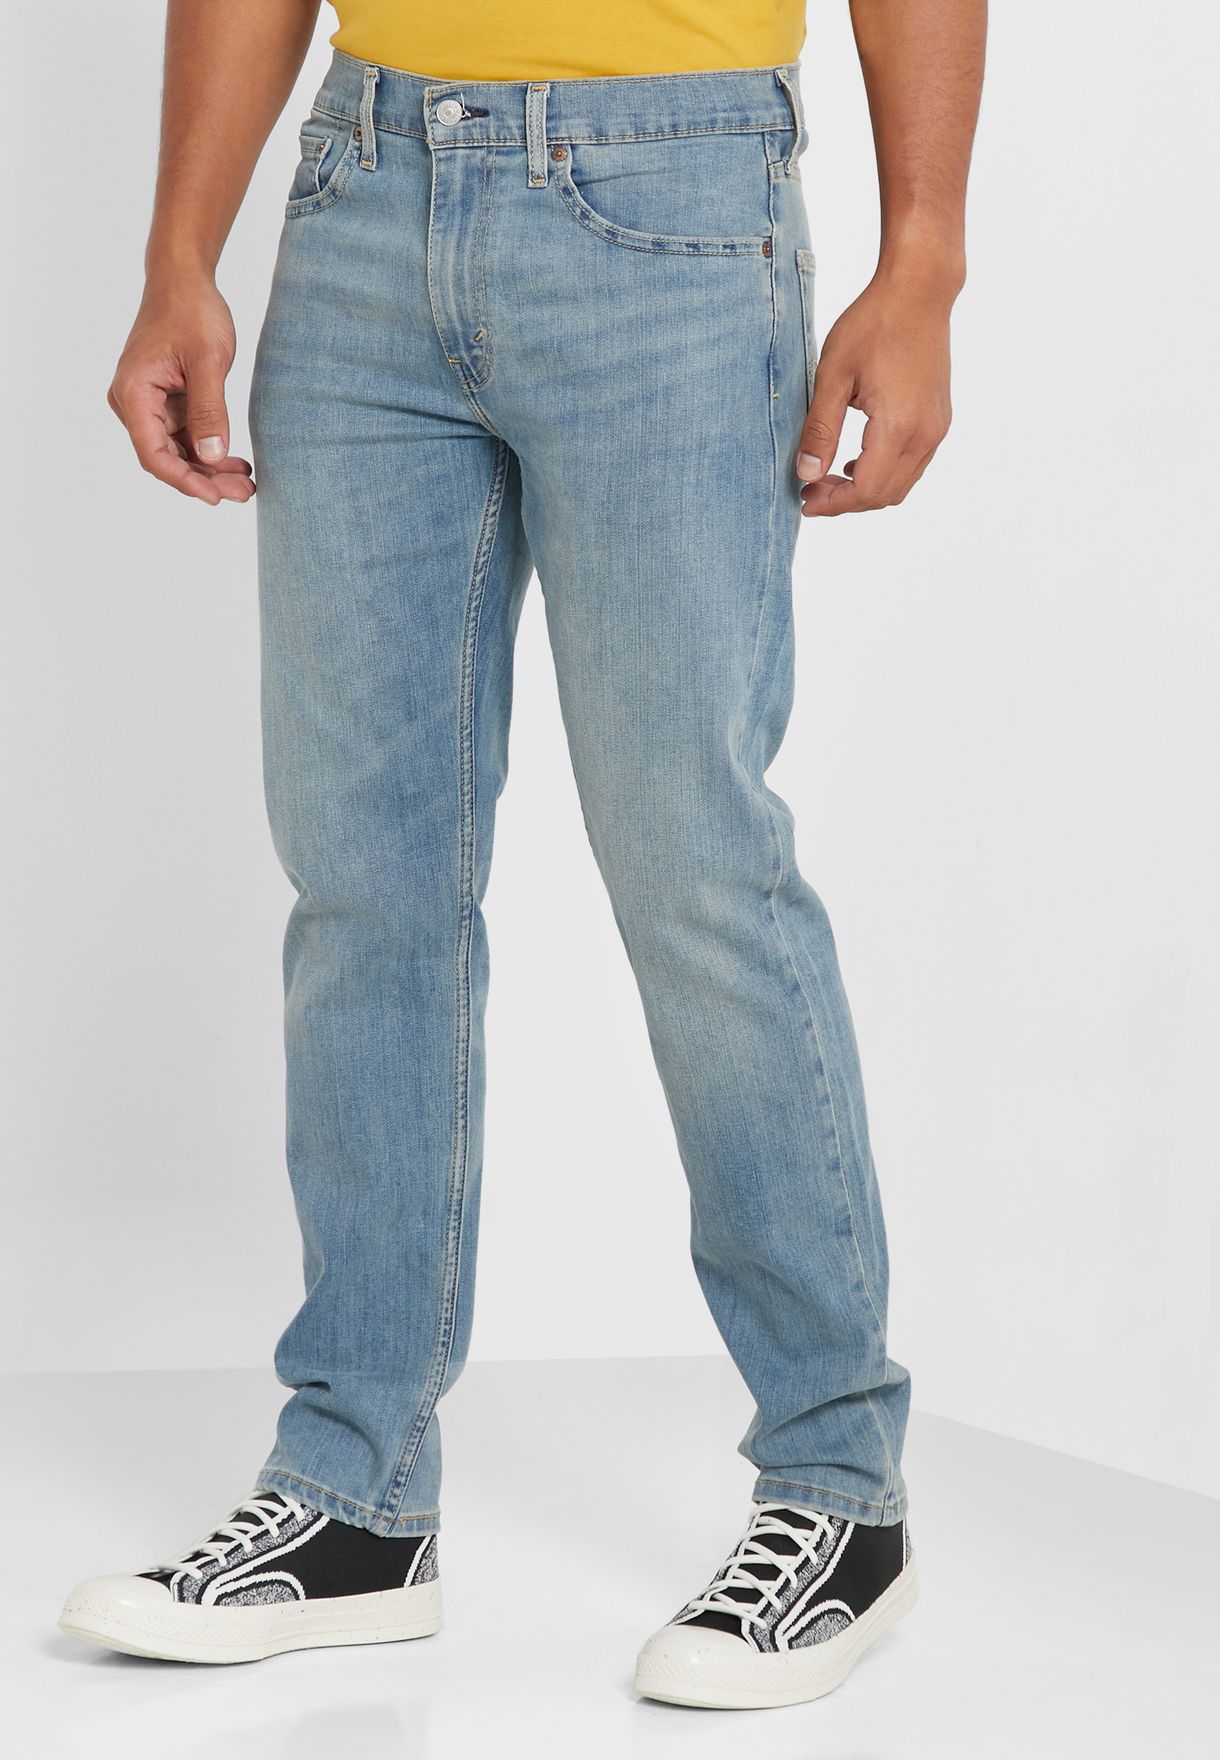 Buy Levis blue Light Wash Tapered Fit Jeans for Men in Dubai, Abu Dhabi